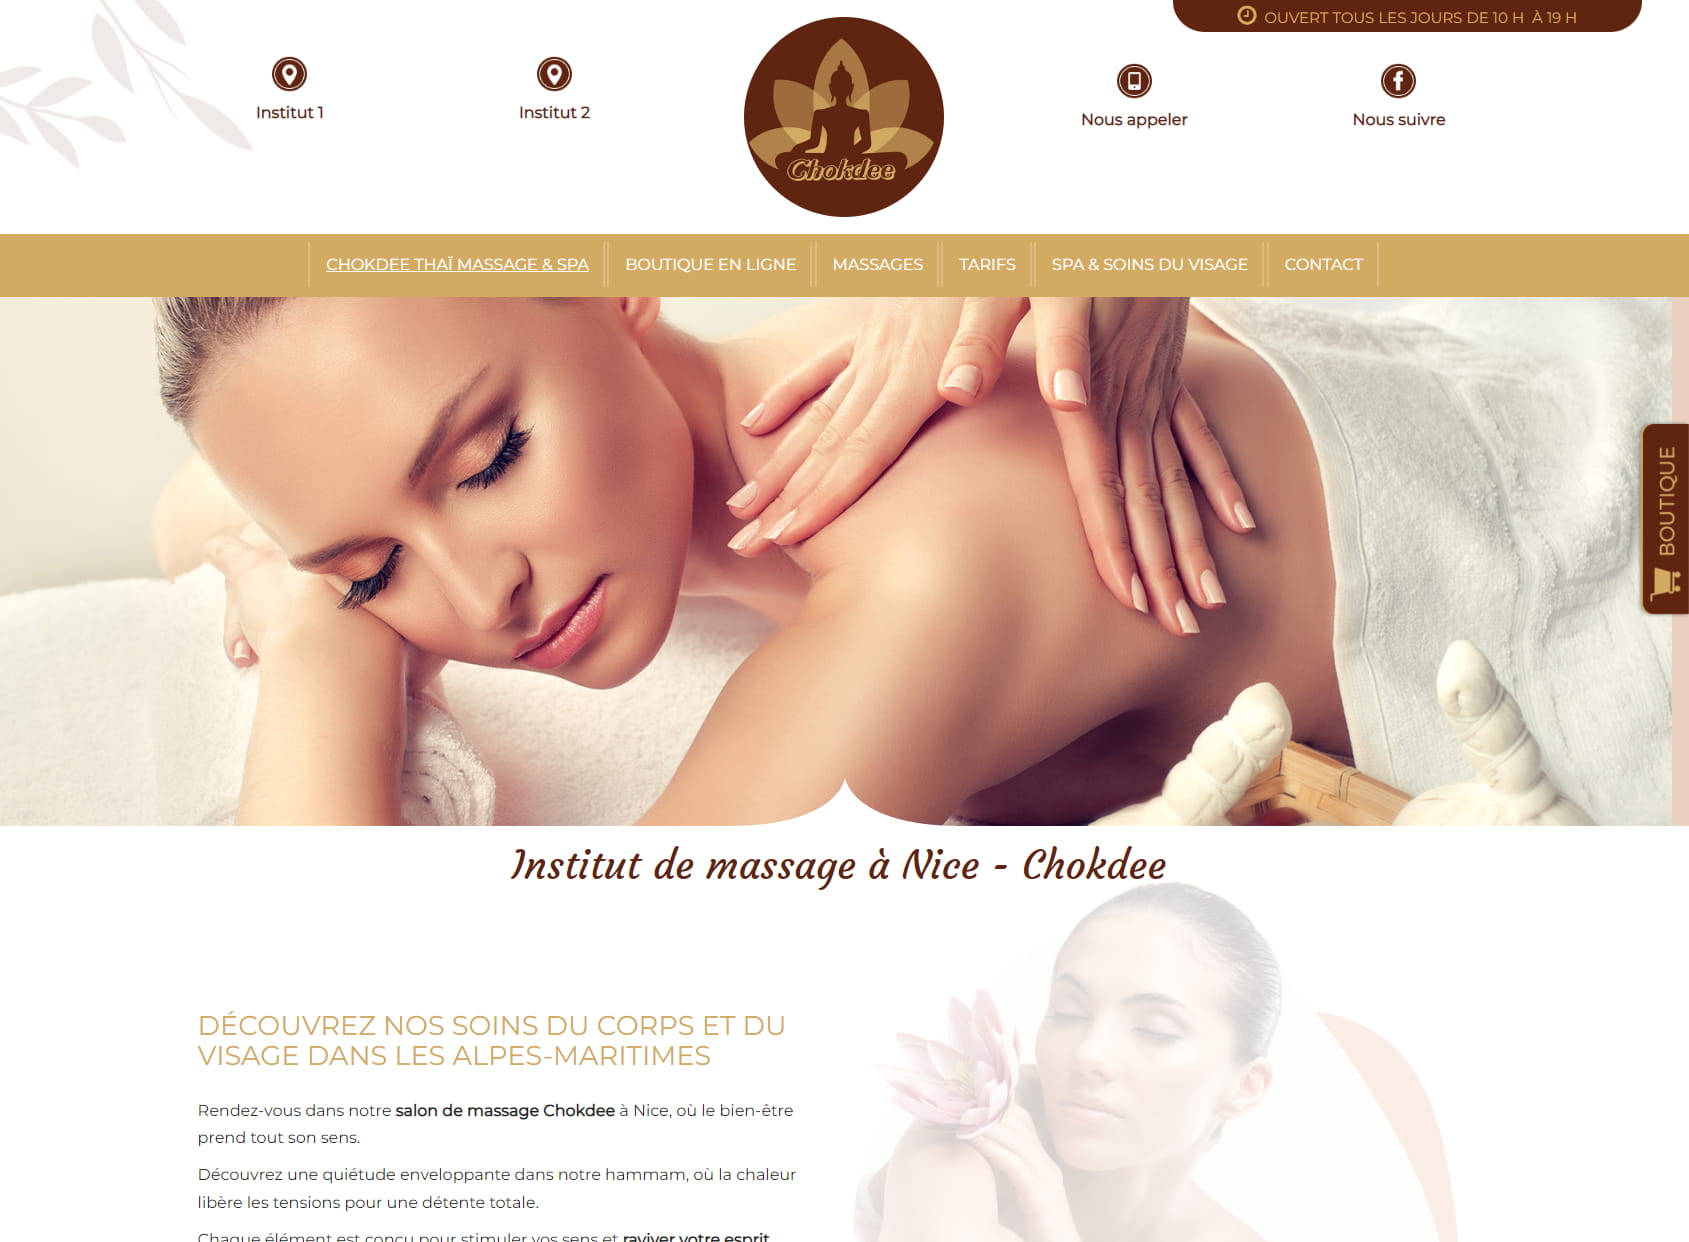 Chokdee Thai Massage & Spa Nice